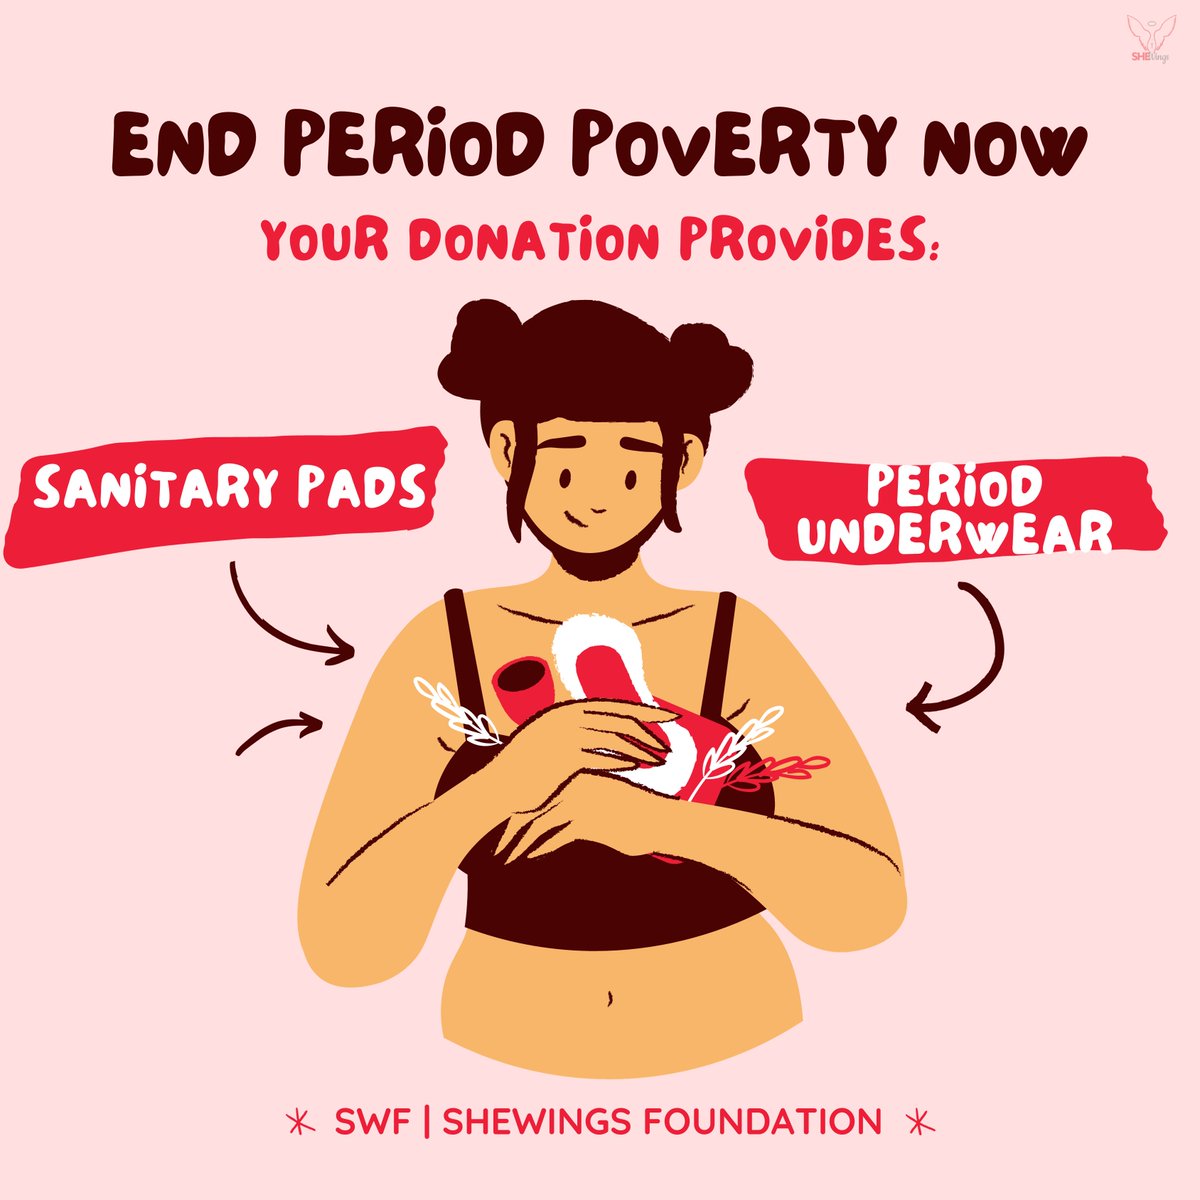 𝗬𝗼𝘂𝗿 𝗗𝗼𝗻𝗮𝘁𝗶𝗼𝗻 𝗖𝗮𝗻 𝗘𝗻𝗱 𝗣𝗲𝗿𝗶𝗼𝗱 𝗣𝗼𝘃𝗲𝗿𝘁𝘆!
#endperiodpoverty #periodstruggles #periodtalk